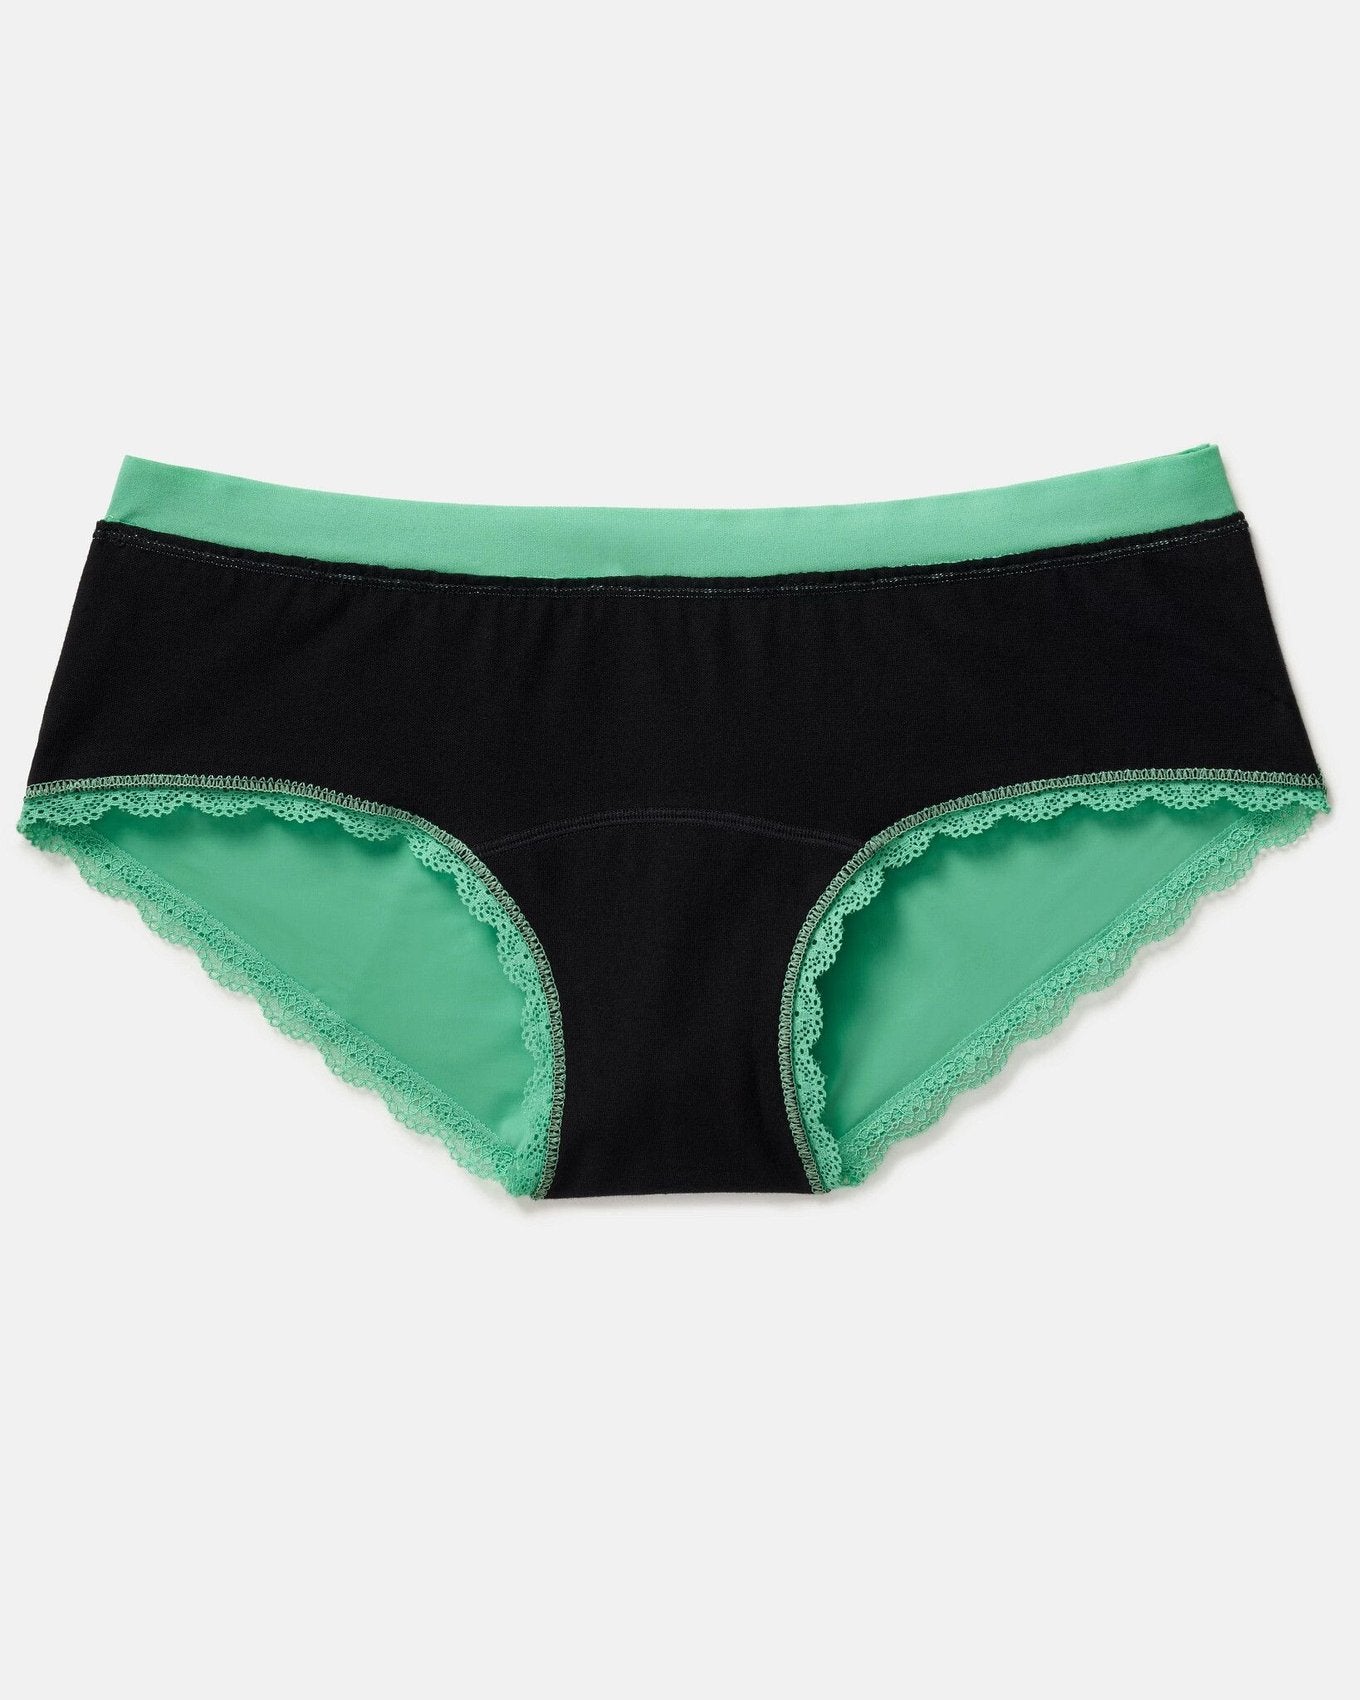 Olivia period-proof panty – Joyja